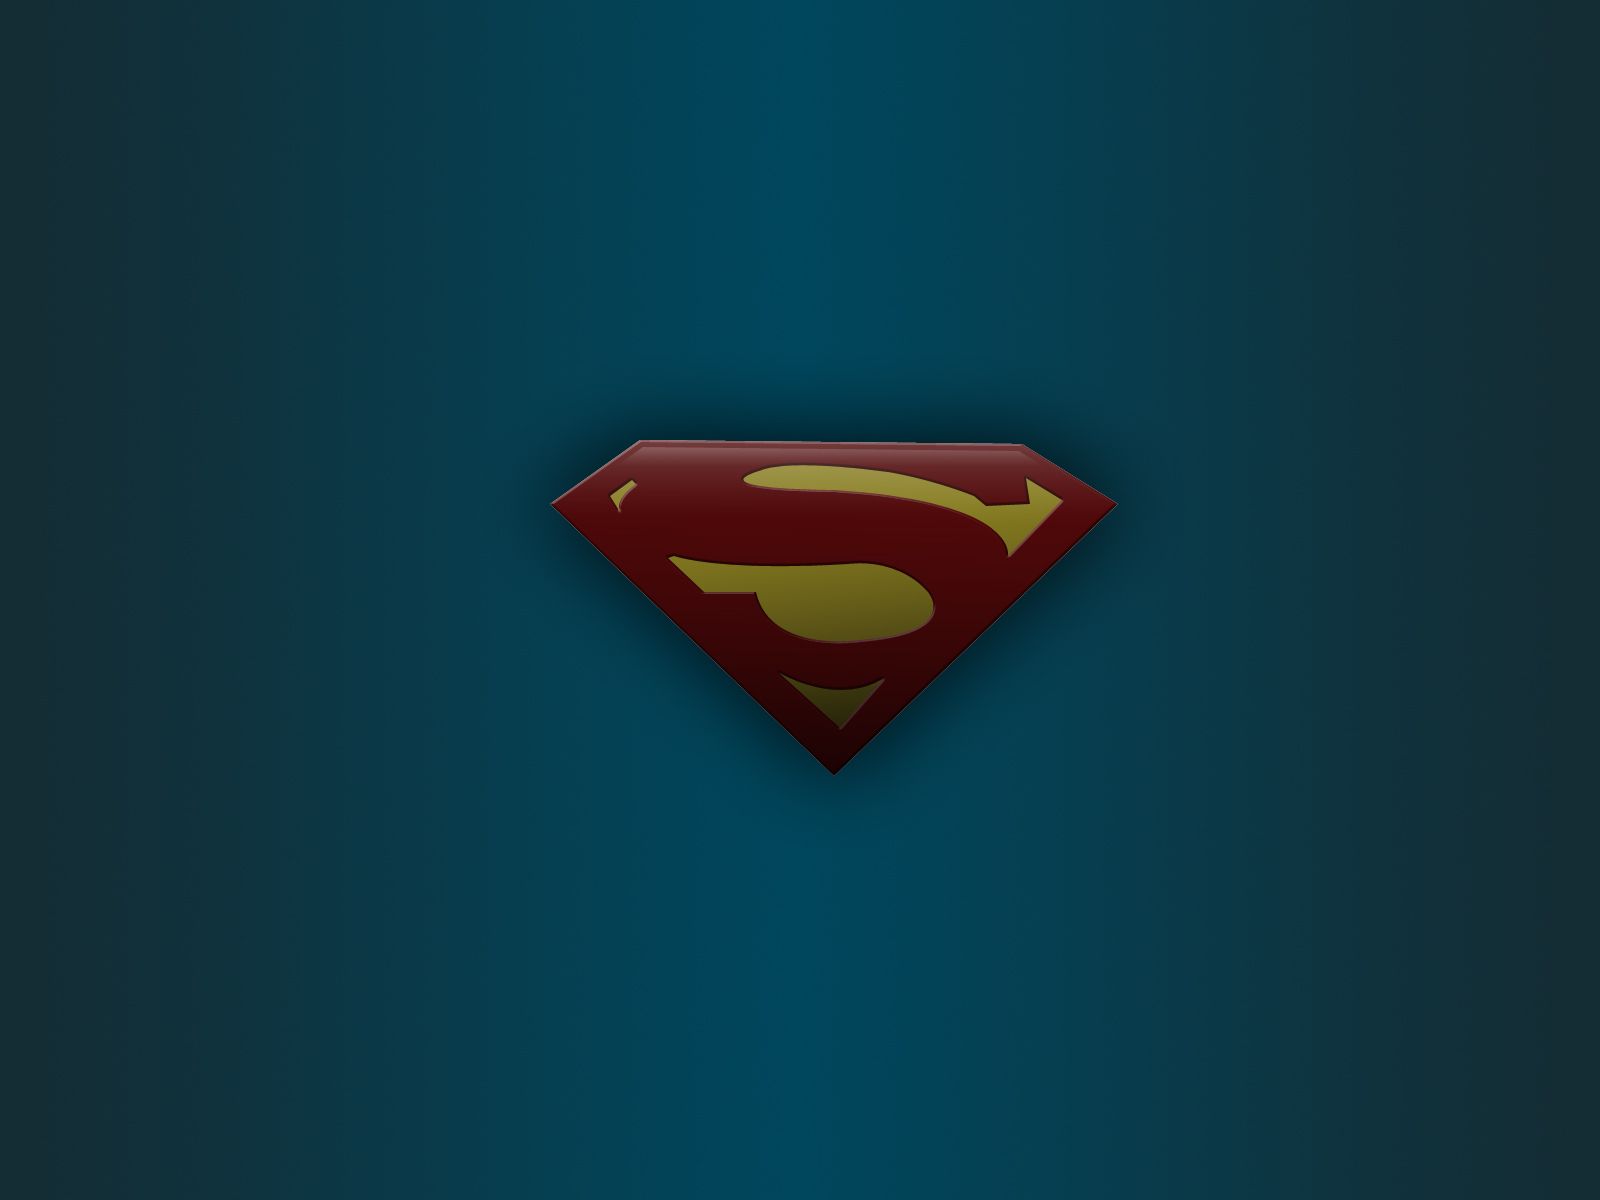 Superman   Logo wallpaper   Super man hd logo   Superman wallpaper